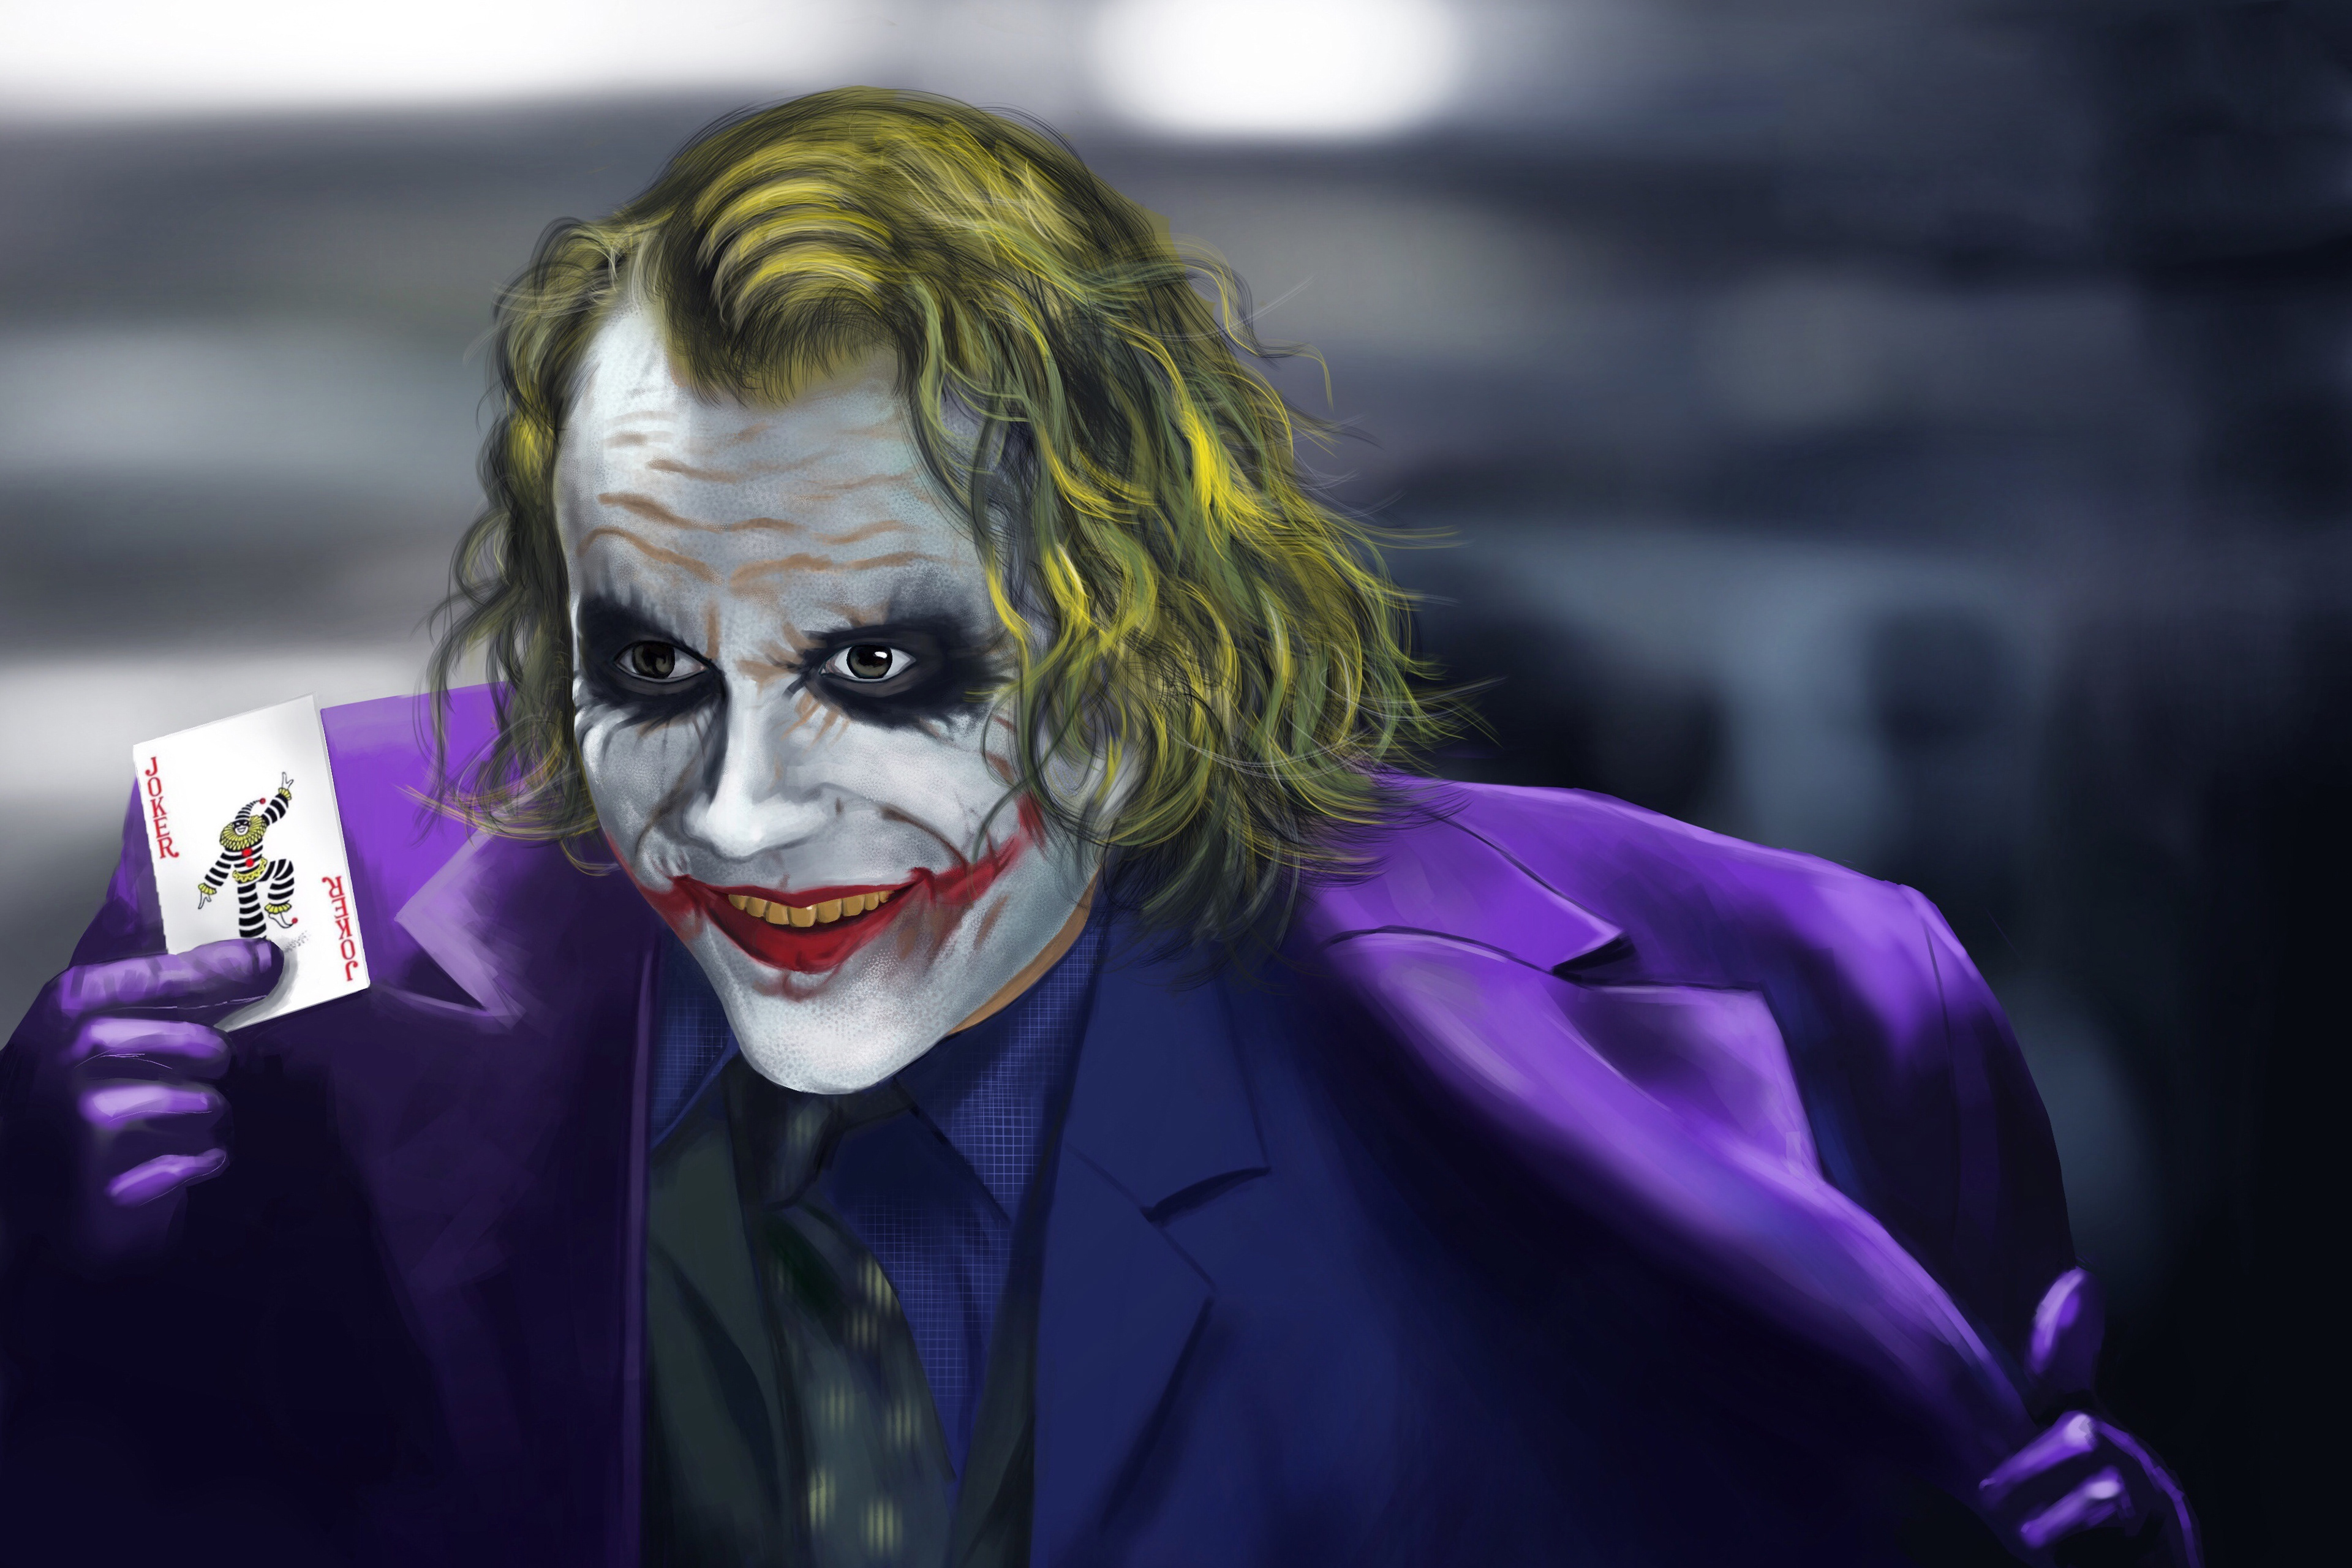  Joker  4k  New Artwork HD  Superheroes 4k  Wallpapers  